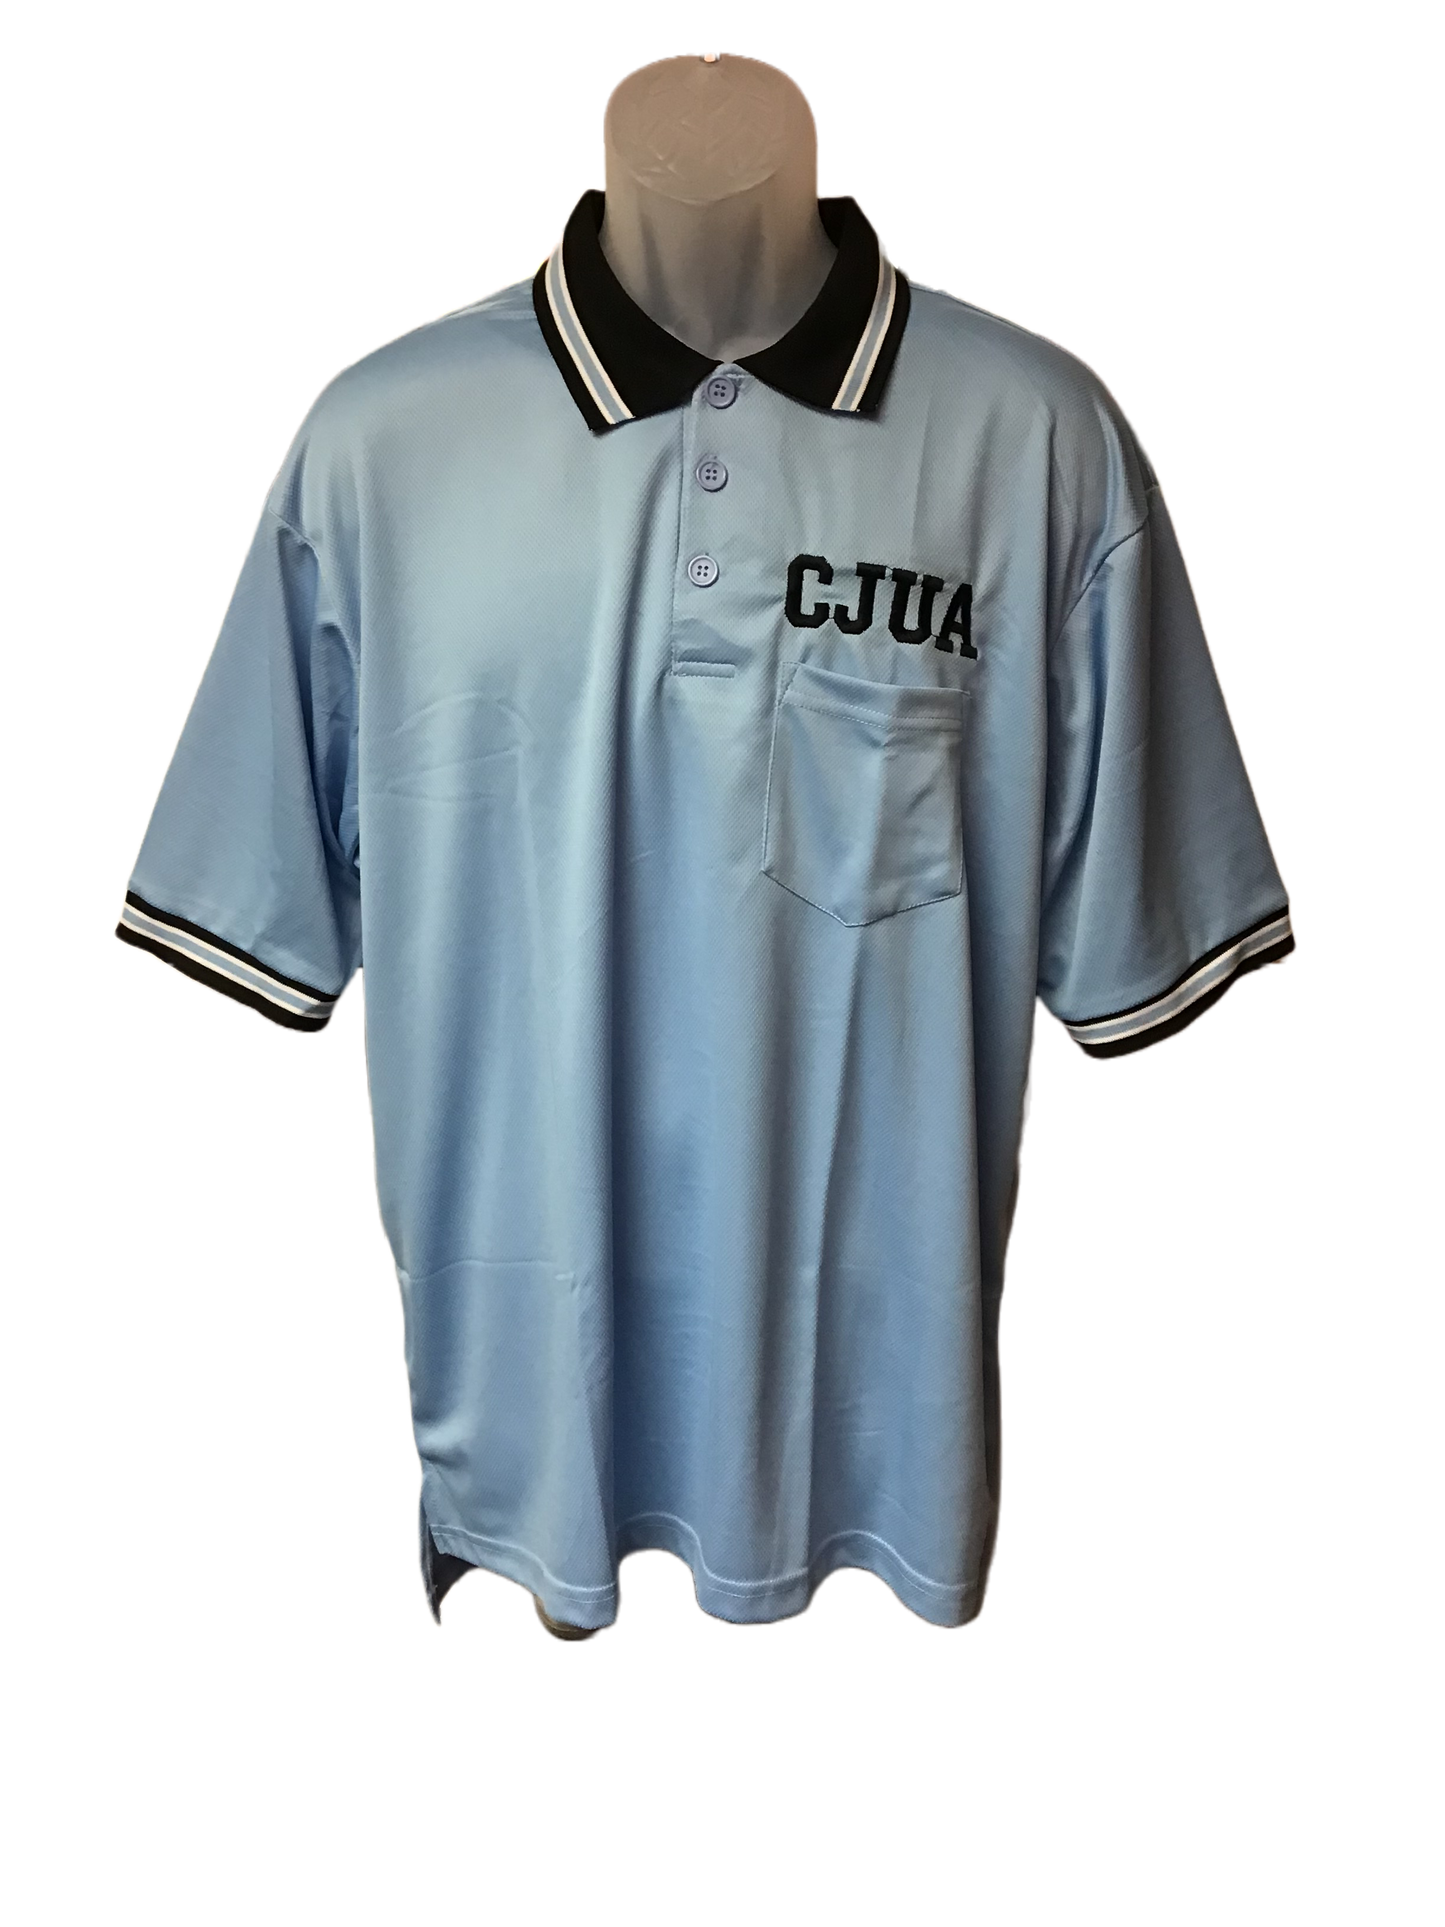 CJUA Umpire Shirts